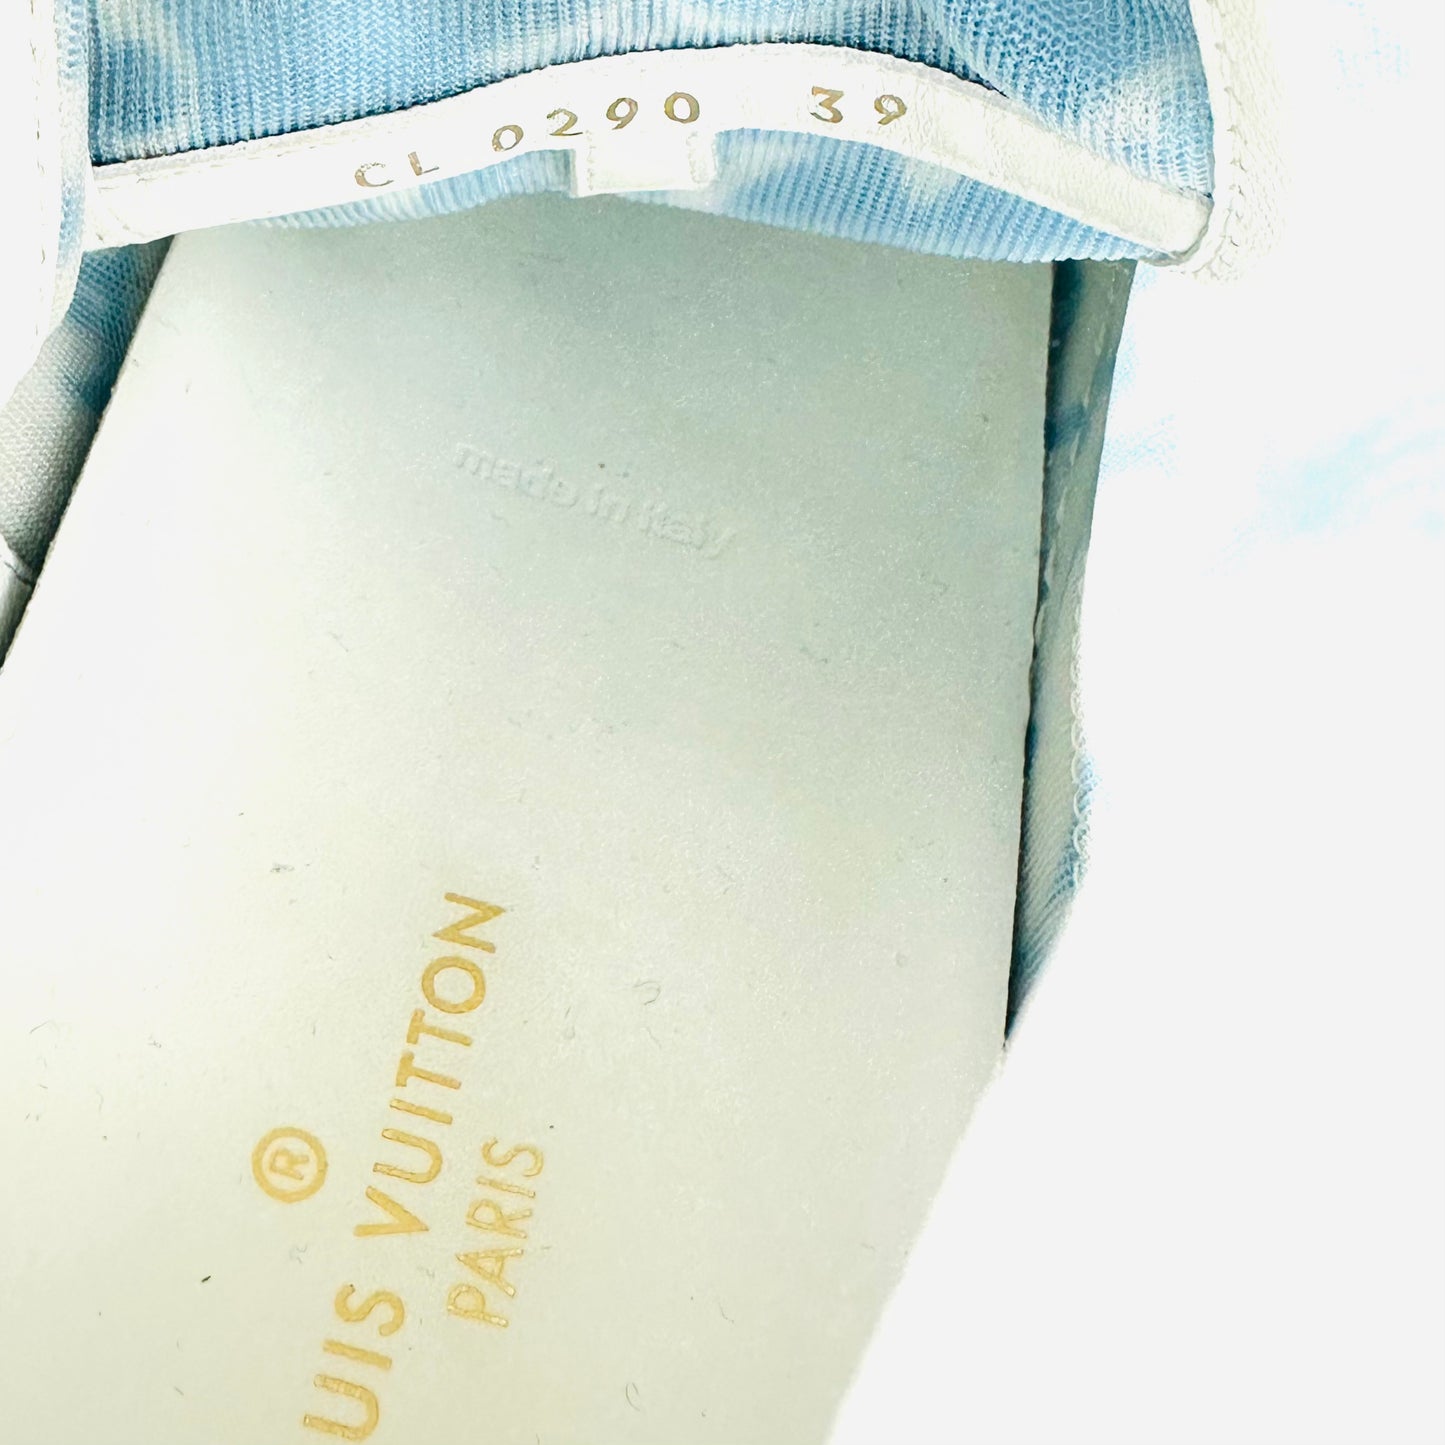 LOUIS VUITTON - High sneakers Stellar monogram LV size 39 EU